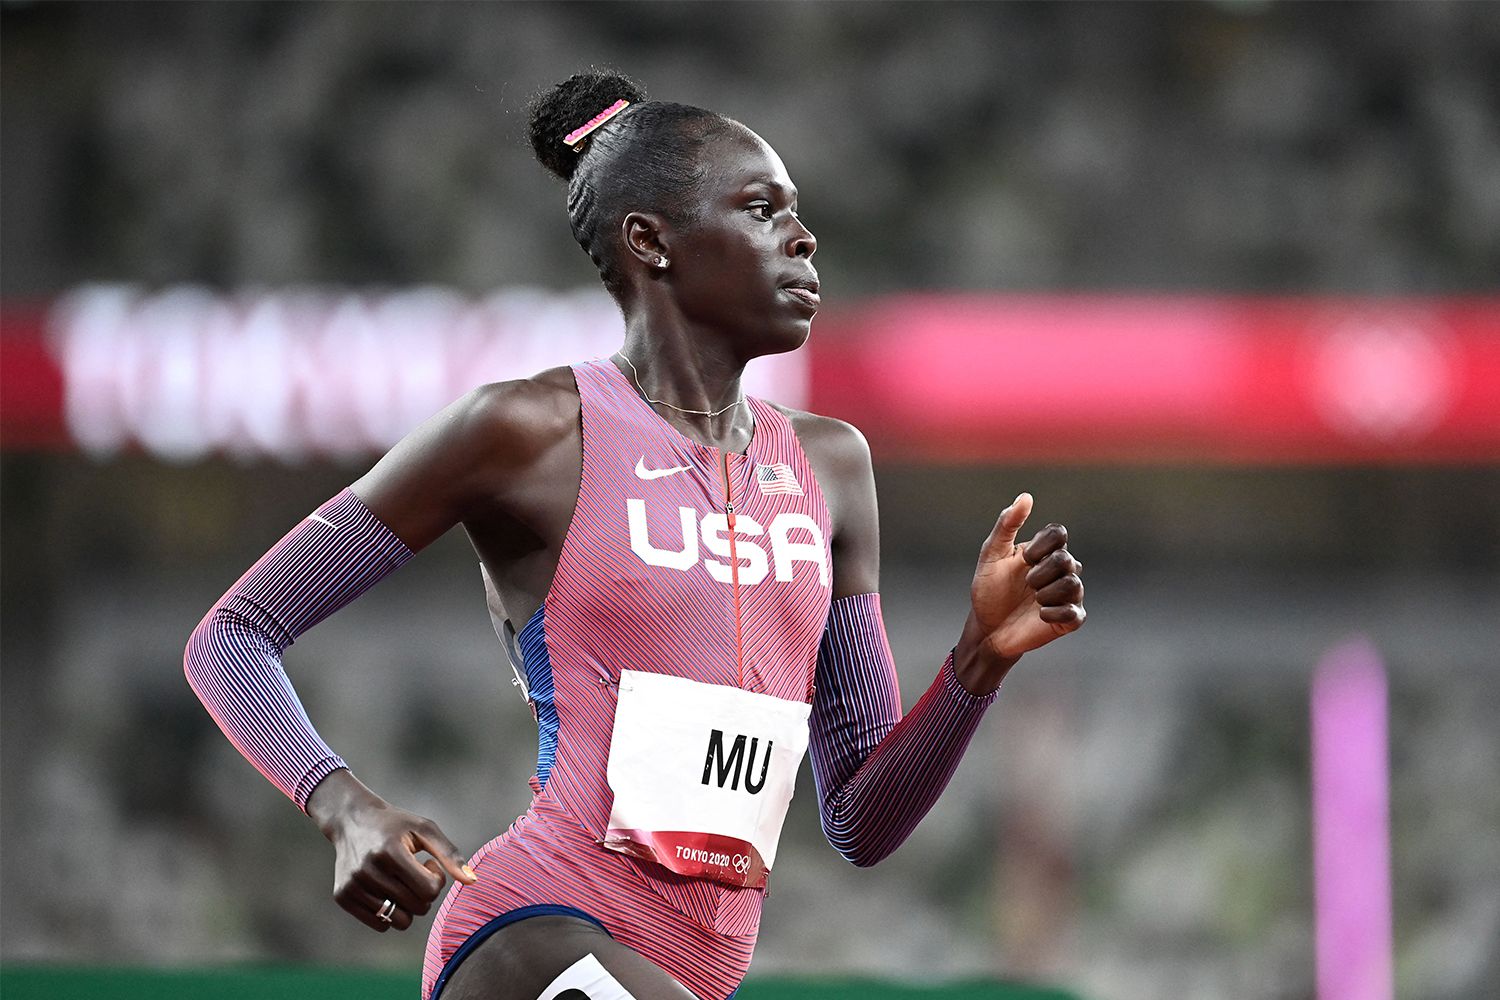 Uwufufu - Most beautiful female athletes at the 2020 Tokyo